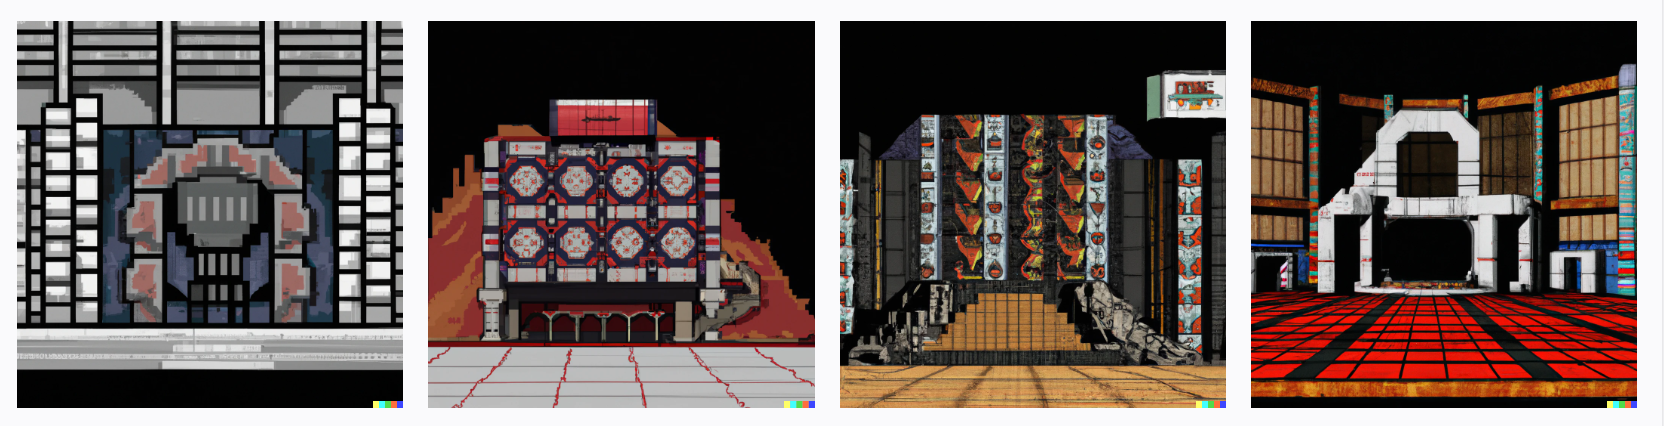 Quake III Arena pixel art, Quake III Arena in future, digital art